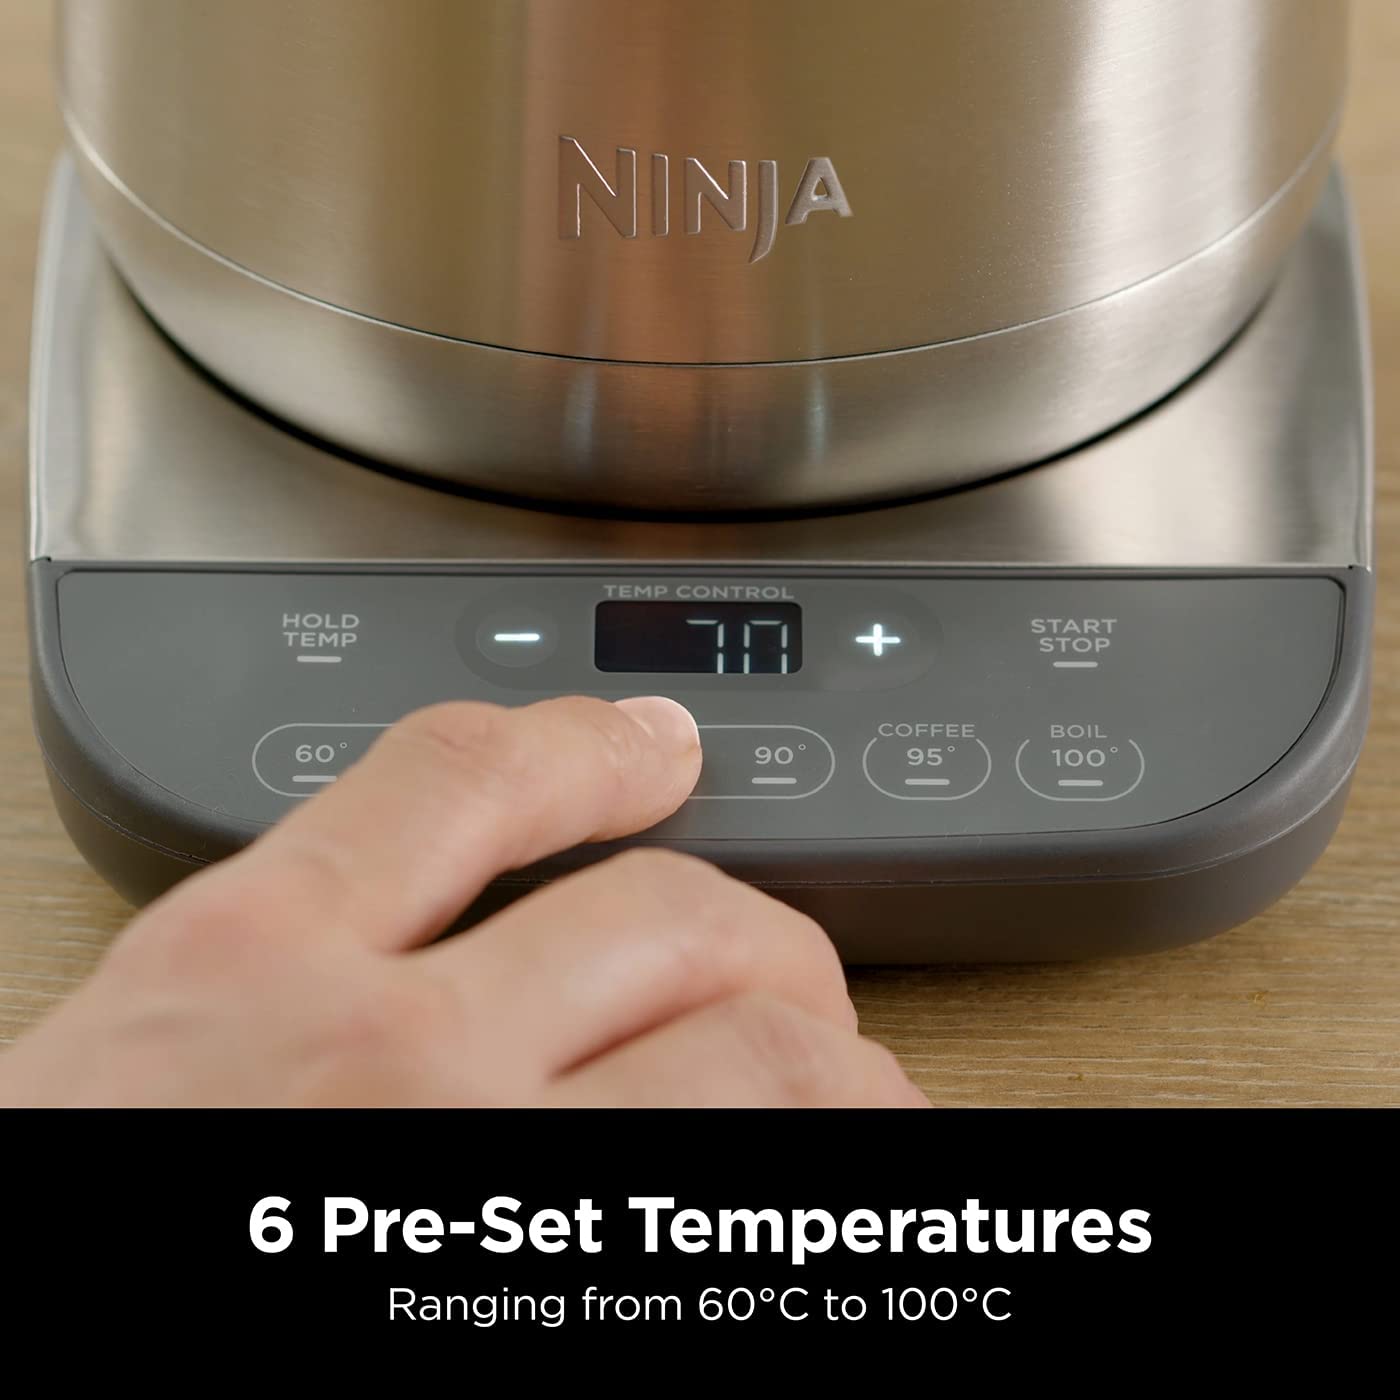 NINJA Ninja Perfect Temperature Kettle - Stainless Steel